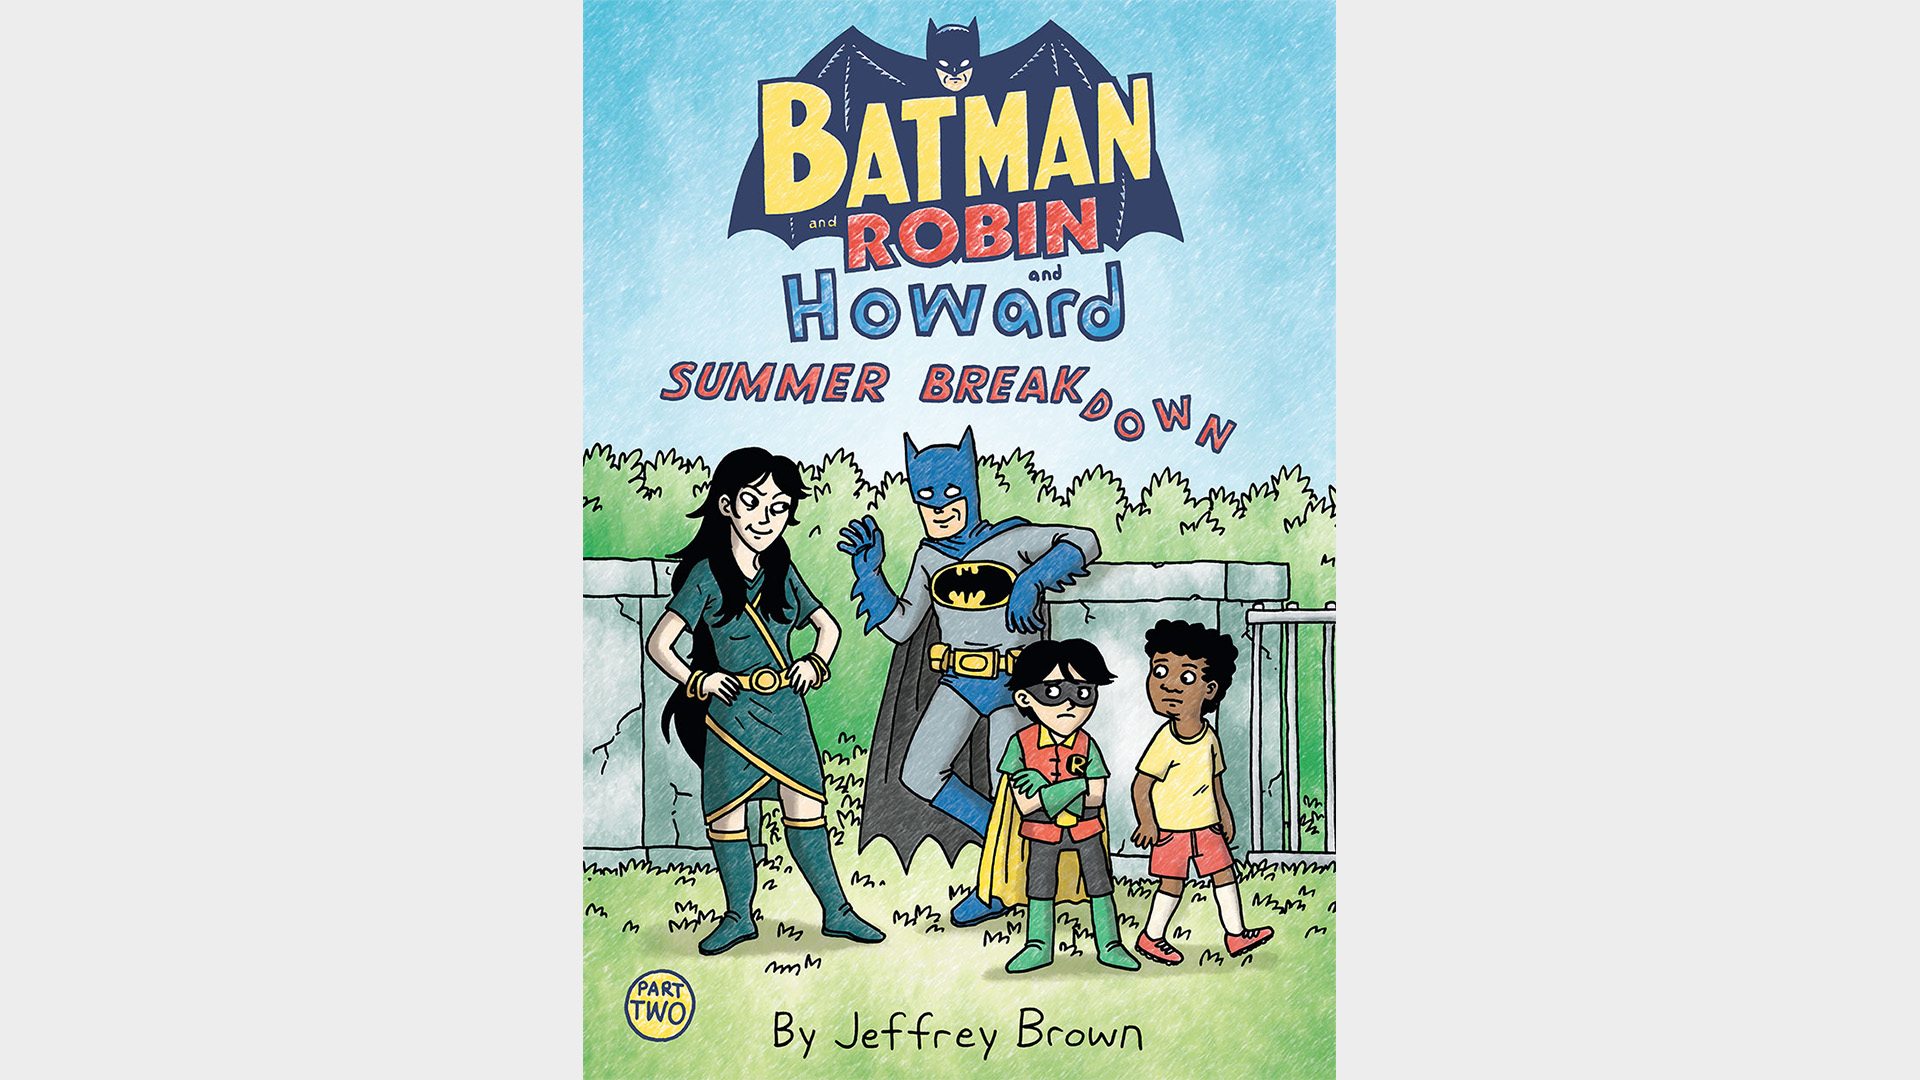 BATMAN AND ROBIN AND HOWARD: SUMMER BREAKDOWN #2